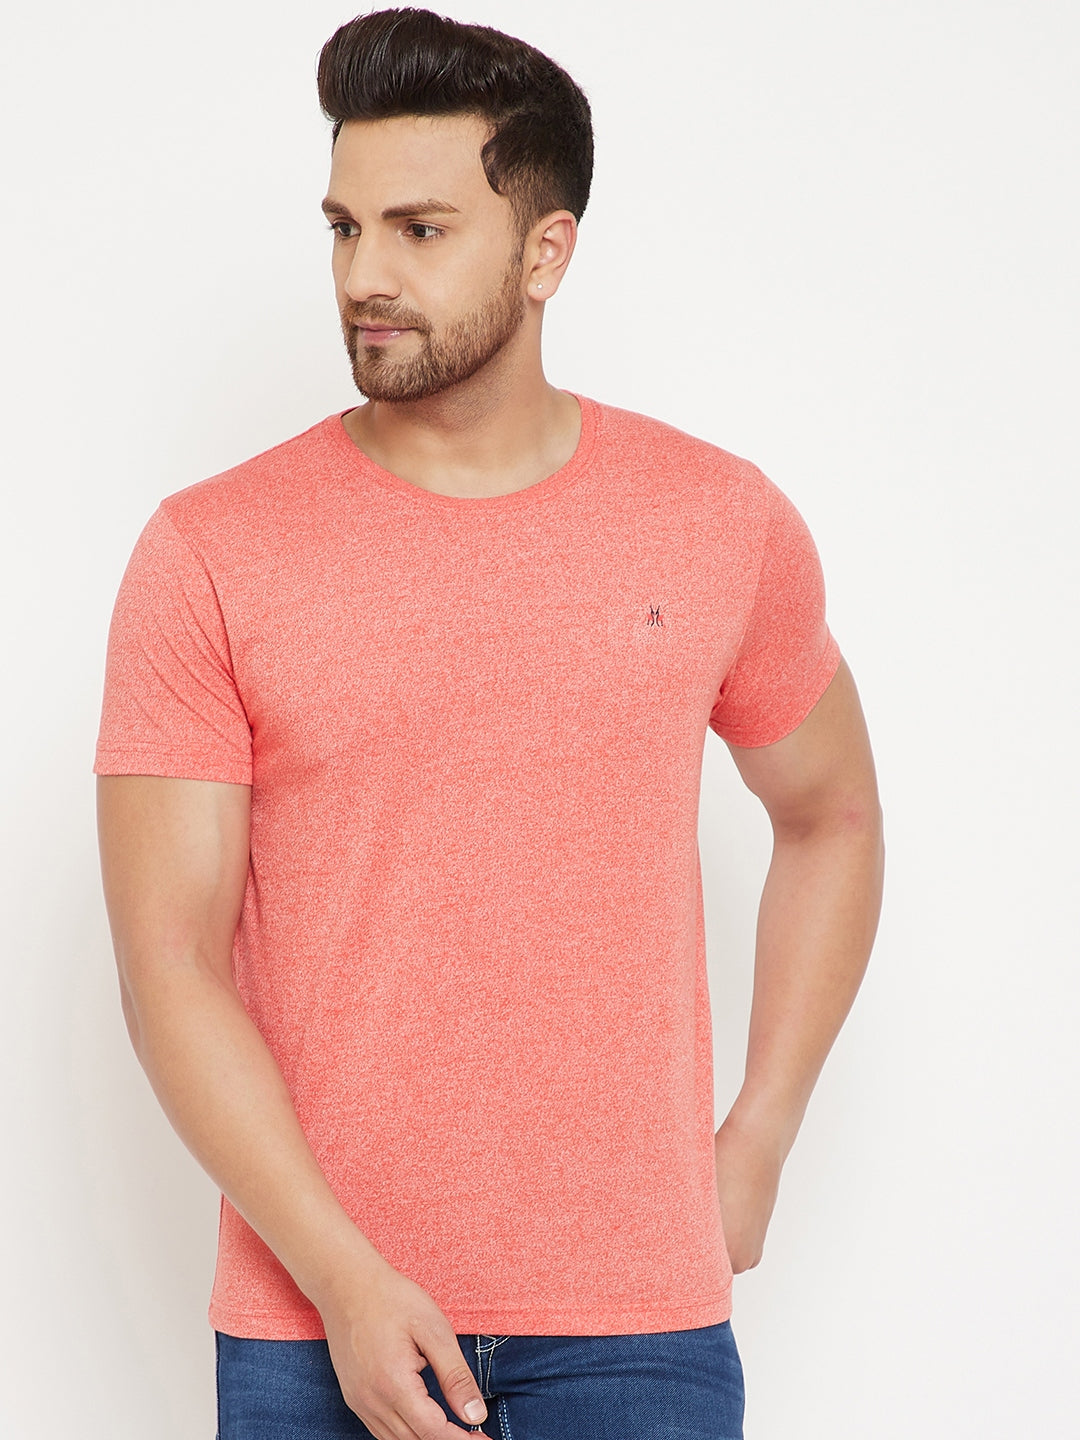 Pink T-shirt - Men T-Shirts